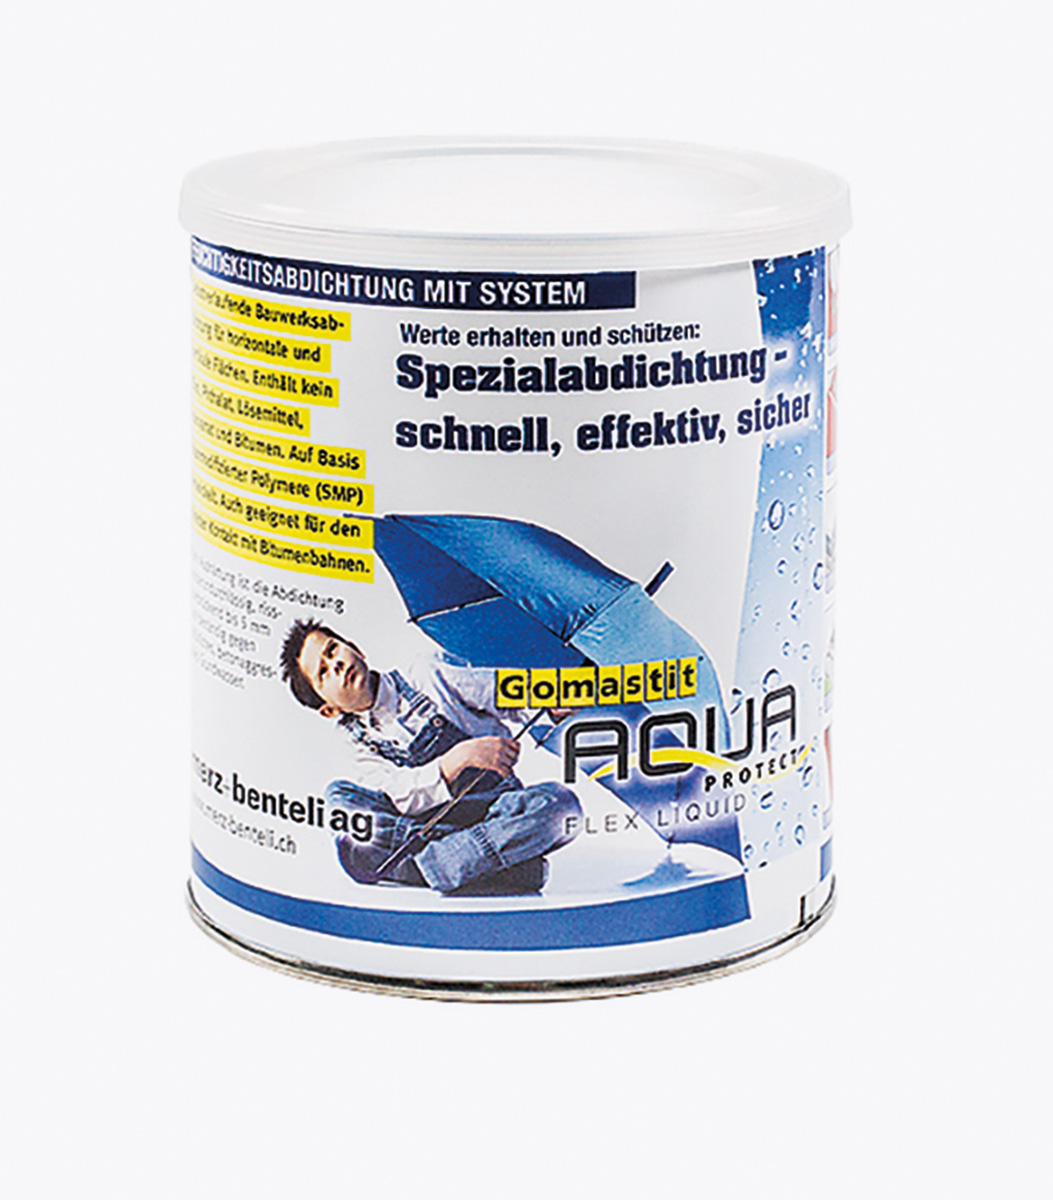 Gomastit Aqua-Protect-Flex liquid